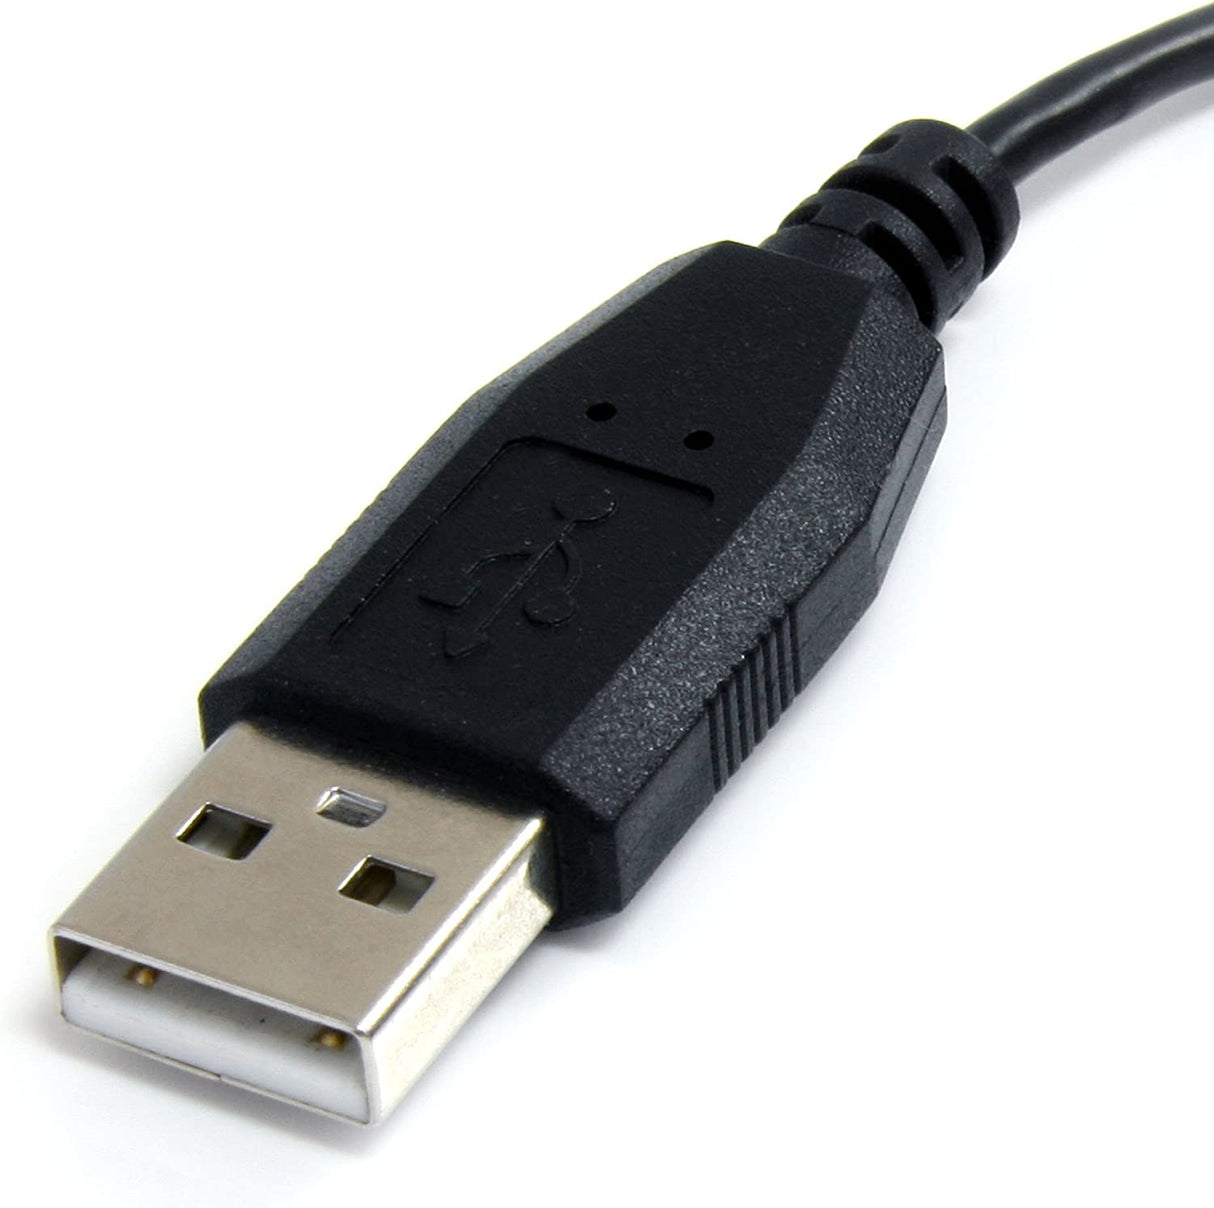 StarTech.com 3 ft / 91cm Micro USB Cable - A to Left Angle Micro B - USB Type A - 90 Degree Micro-USB Type B (M) - Black (UUSBHAUB3LA) 3 ft / 1m Left Angle